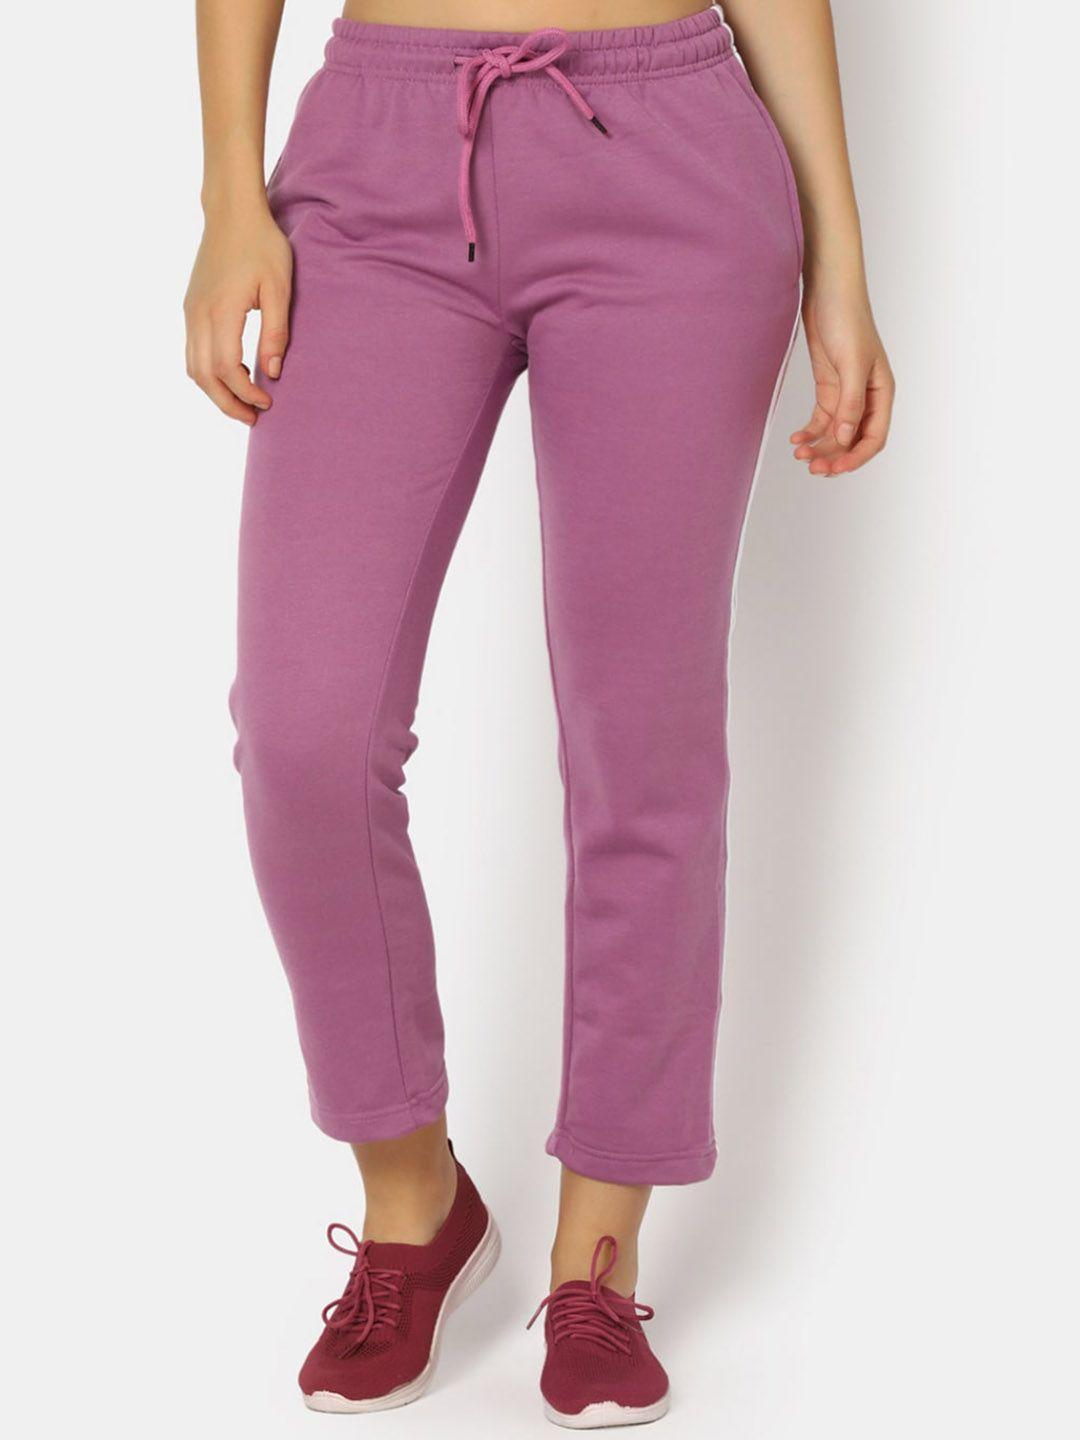 v-mart women mid-rise cotton track pants